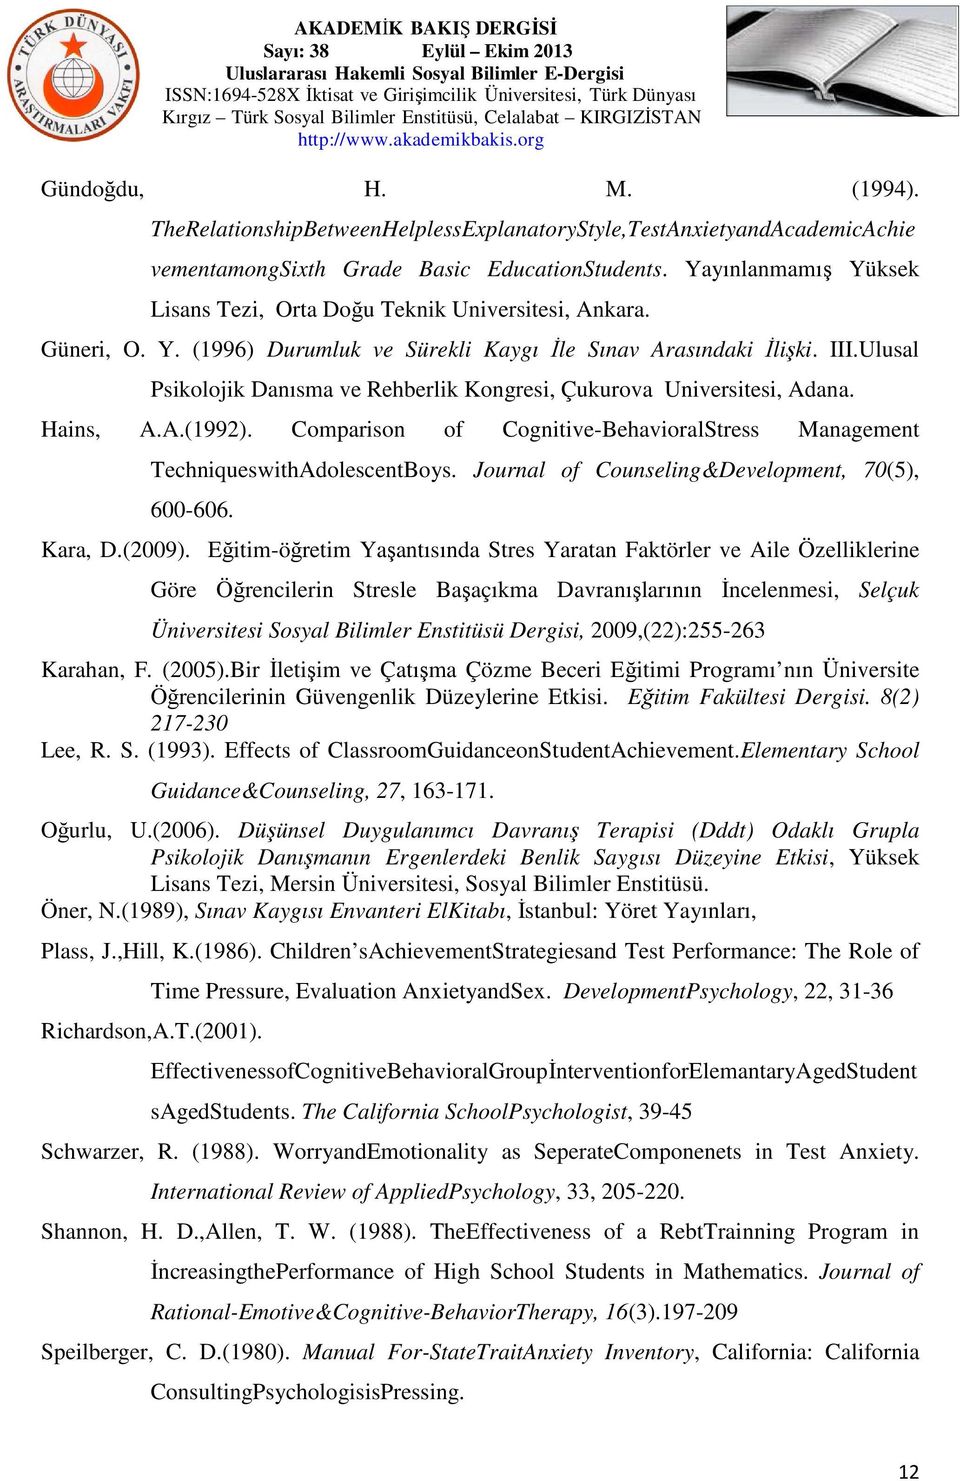 Ulusal Psikolojik Danısma ve Rehberlik Kongresi, Çukurova Universitesi, Adana. Hains, A.A.(1992). Comparison of Cognitive-BehavioralStress Management TechniqueswithAdolescentBoys.